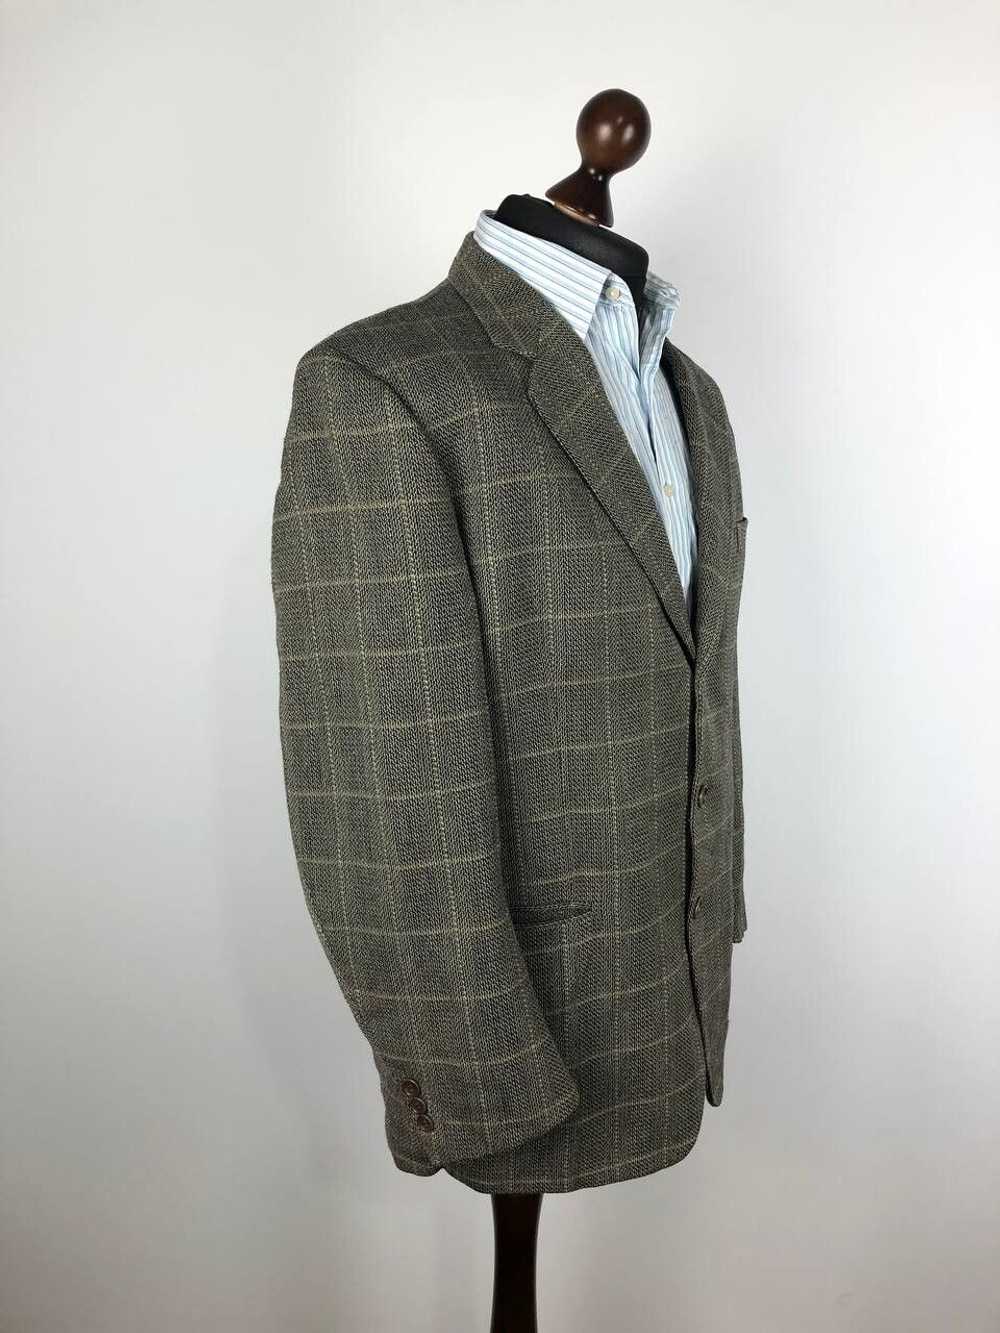 Cerruti 1881 Cerruti 1881 Wool Blazer Jacket Ital… - image 3